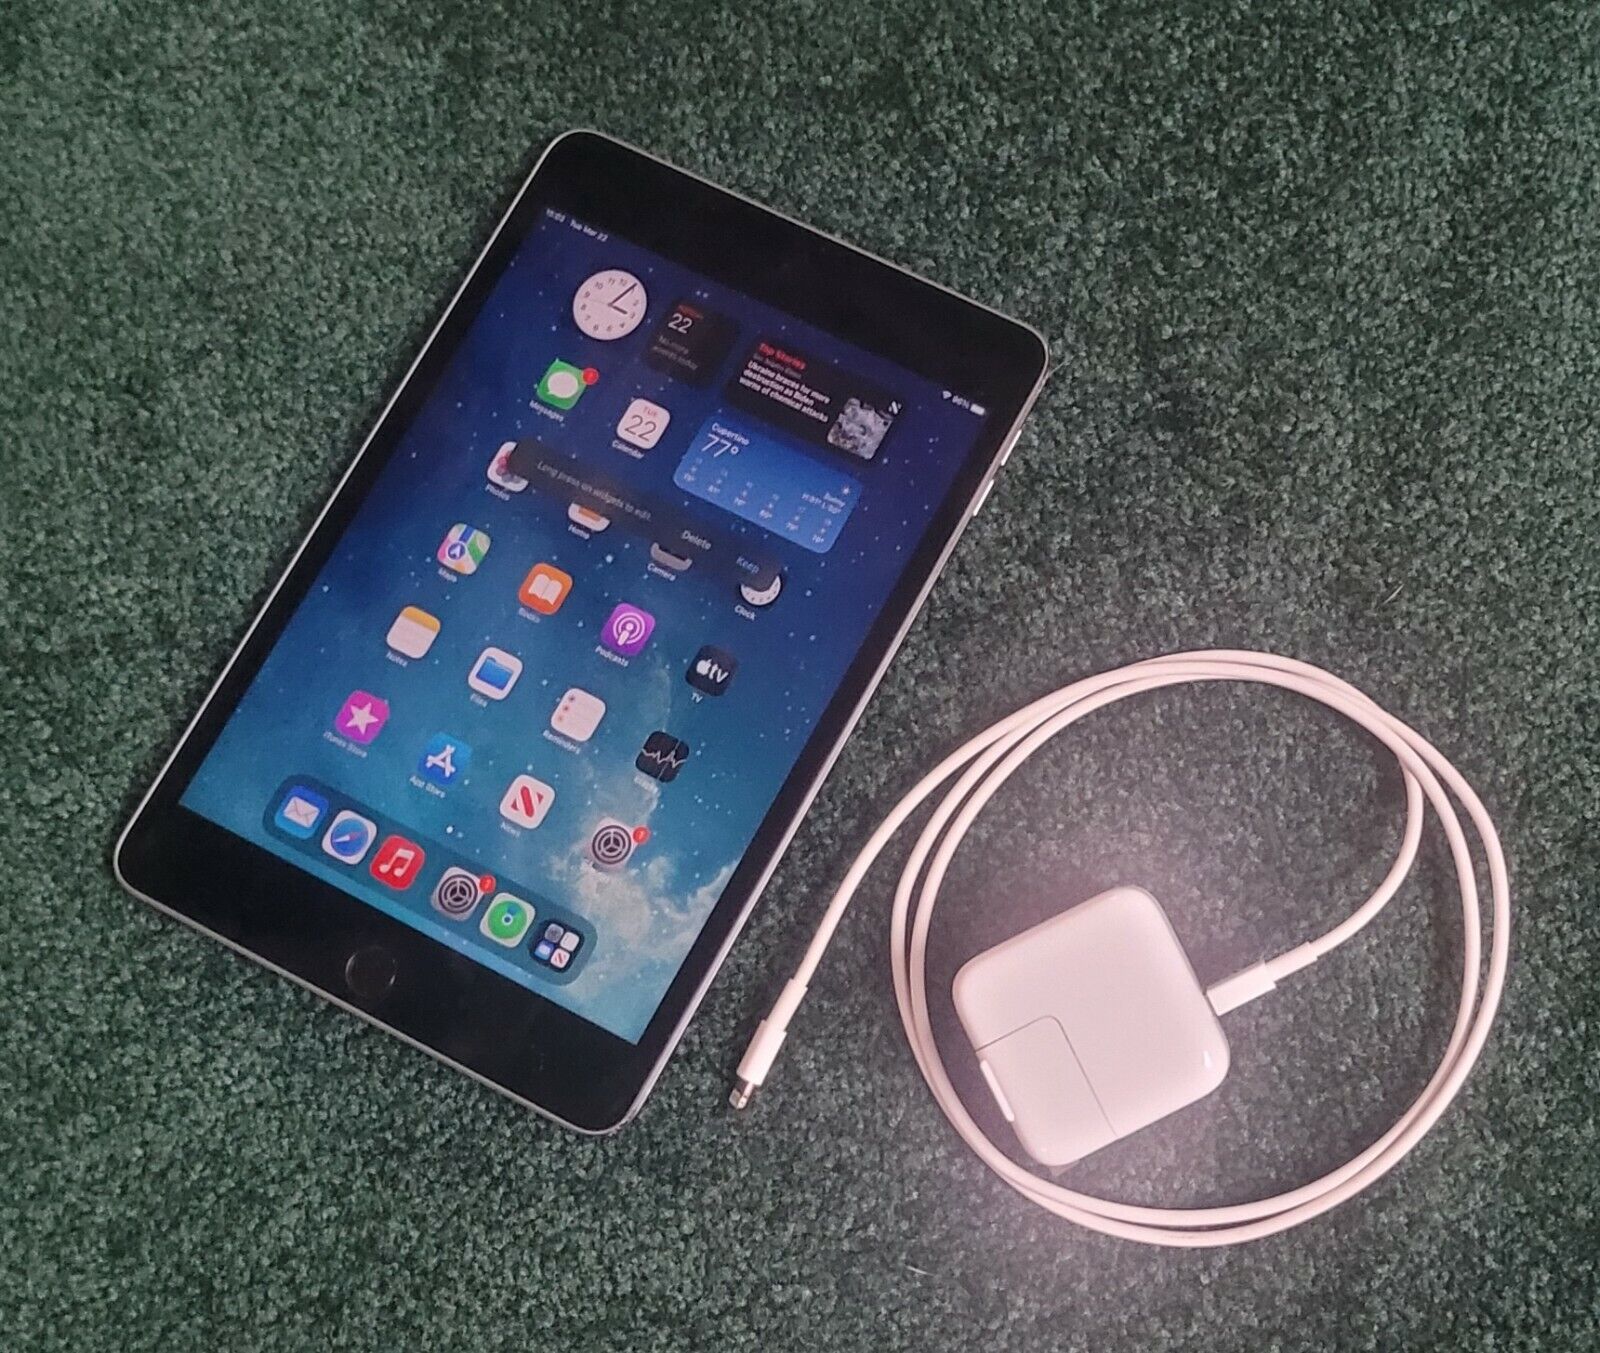 Apple iPad mini 4 128GB, Wi-Fi, 7.9in - Space Gray for sale online 